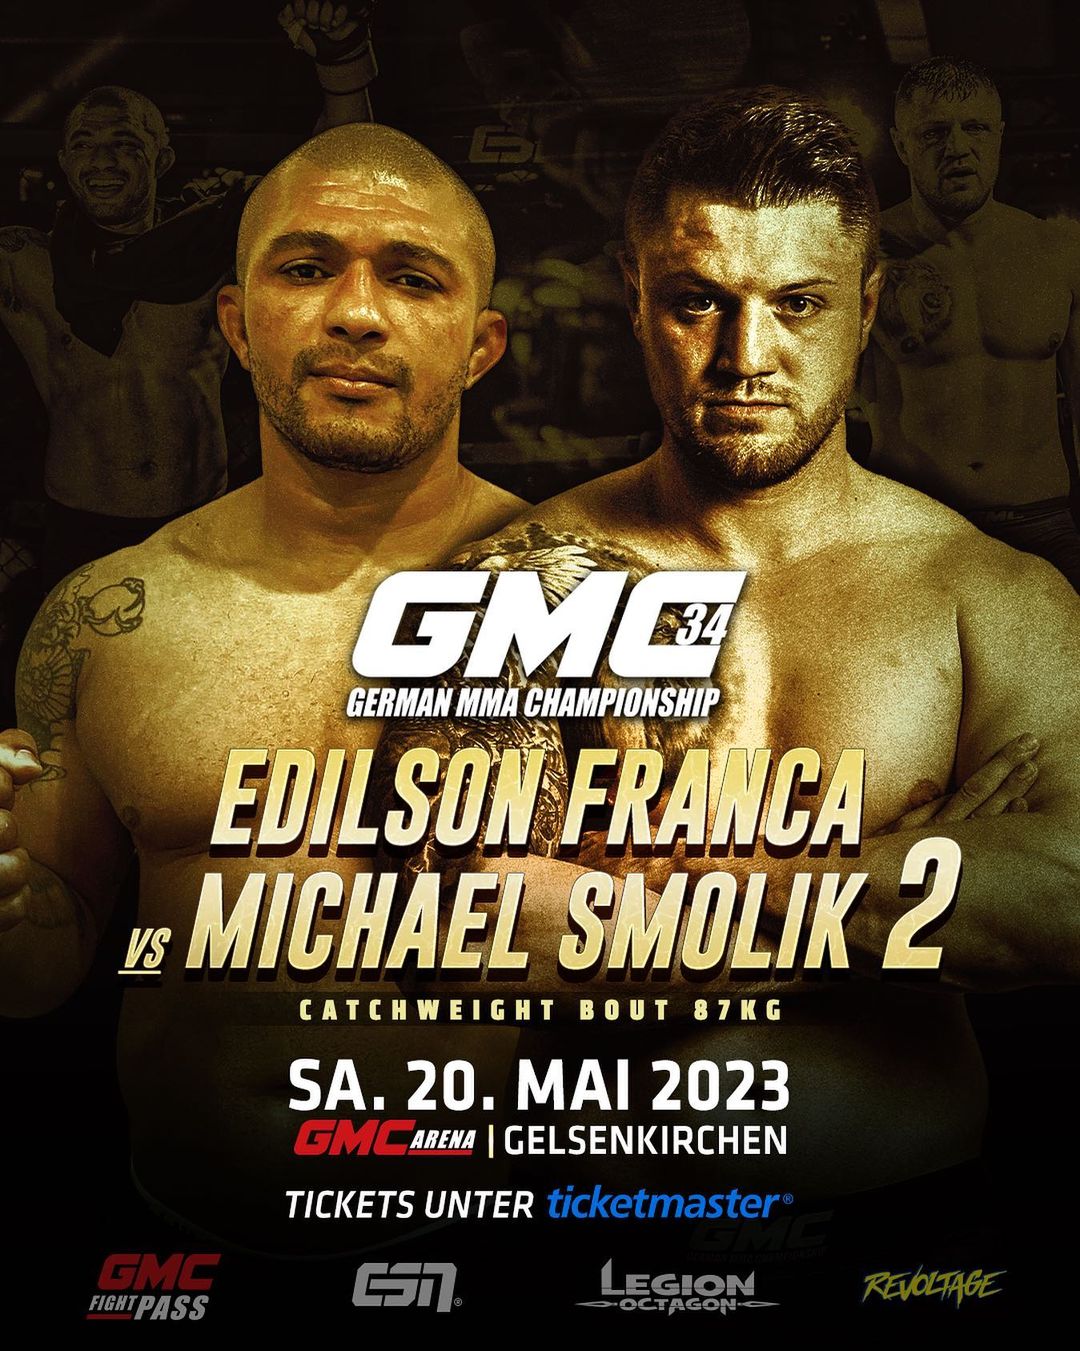 GMC 34 - Franca vs Smolik 2